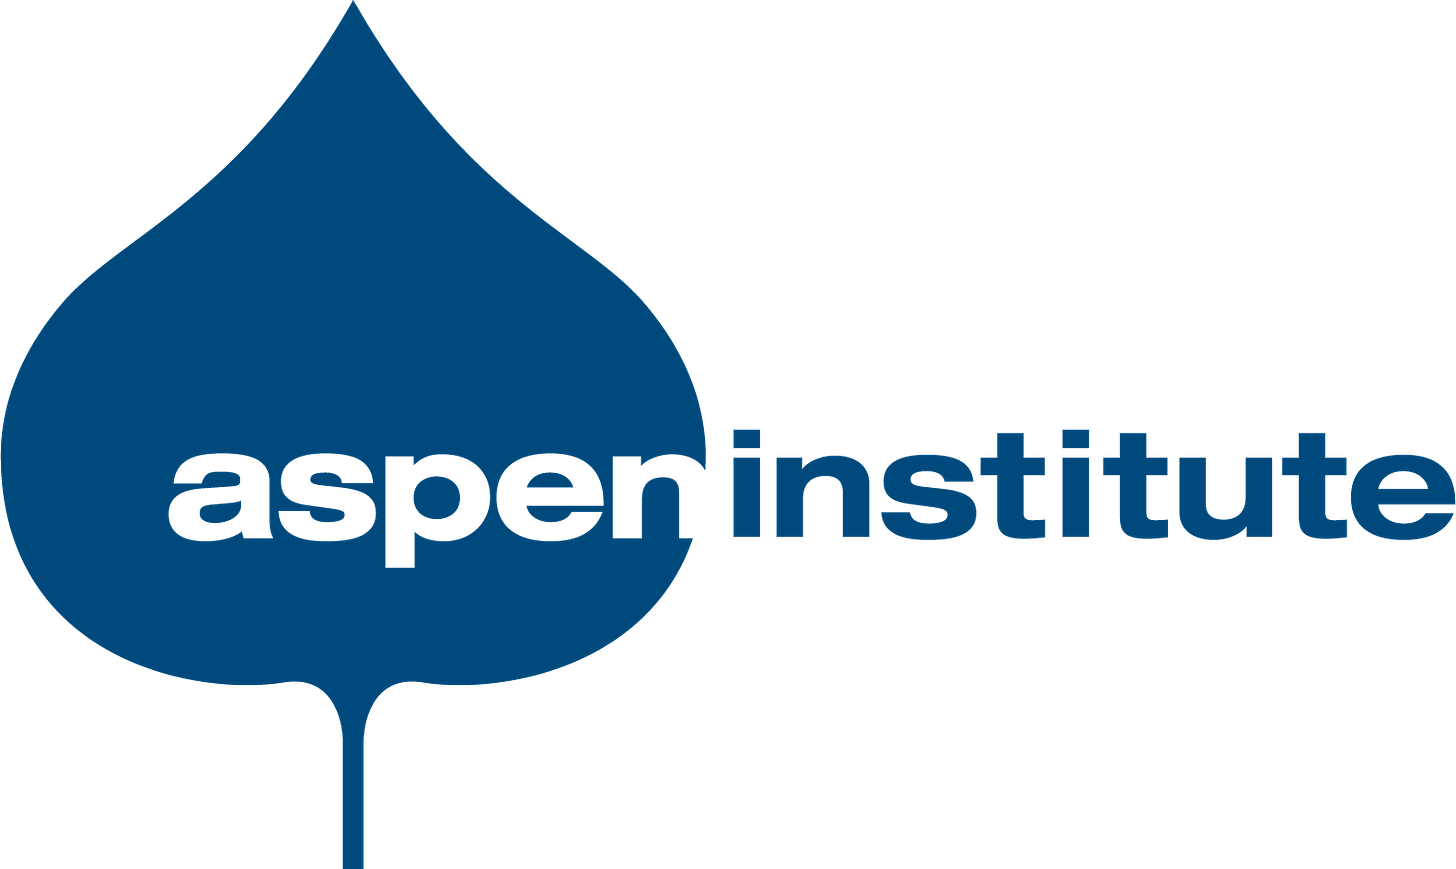 The Institute's Brand Identity - The Aspen Institute